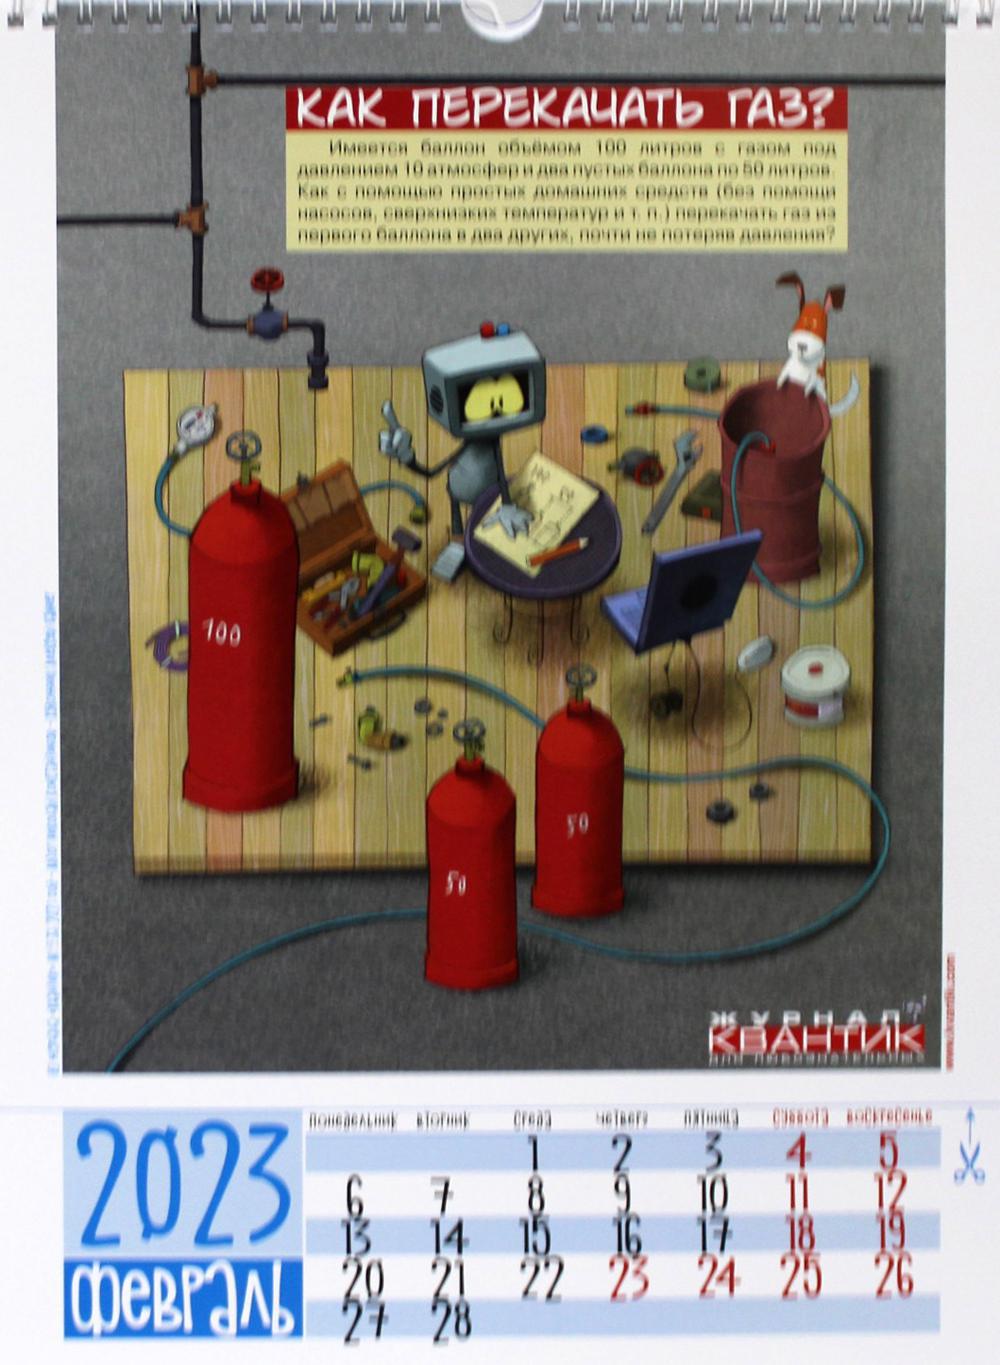 Календарь загадок от журнала «Квантик» на 2023 год